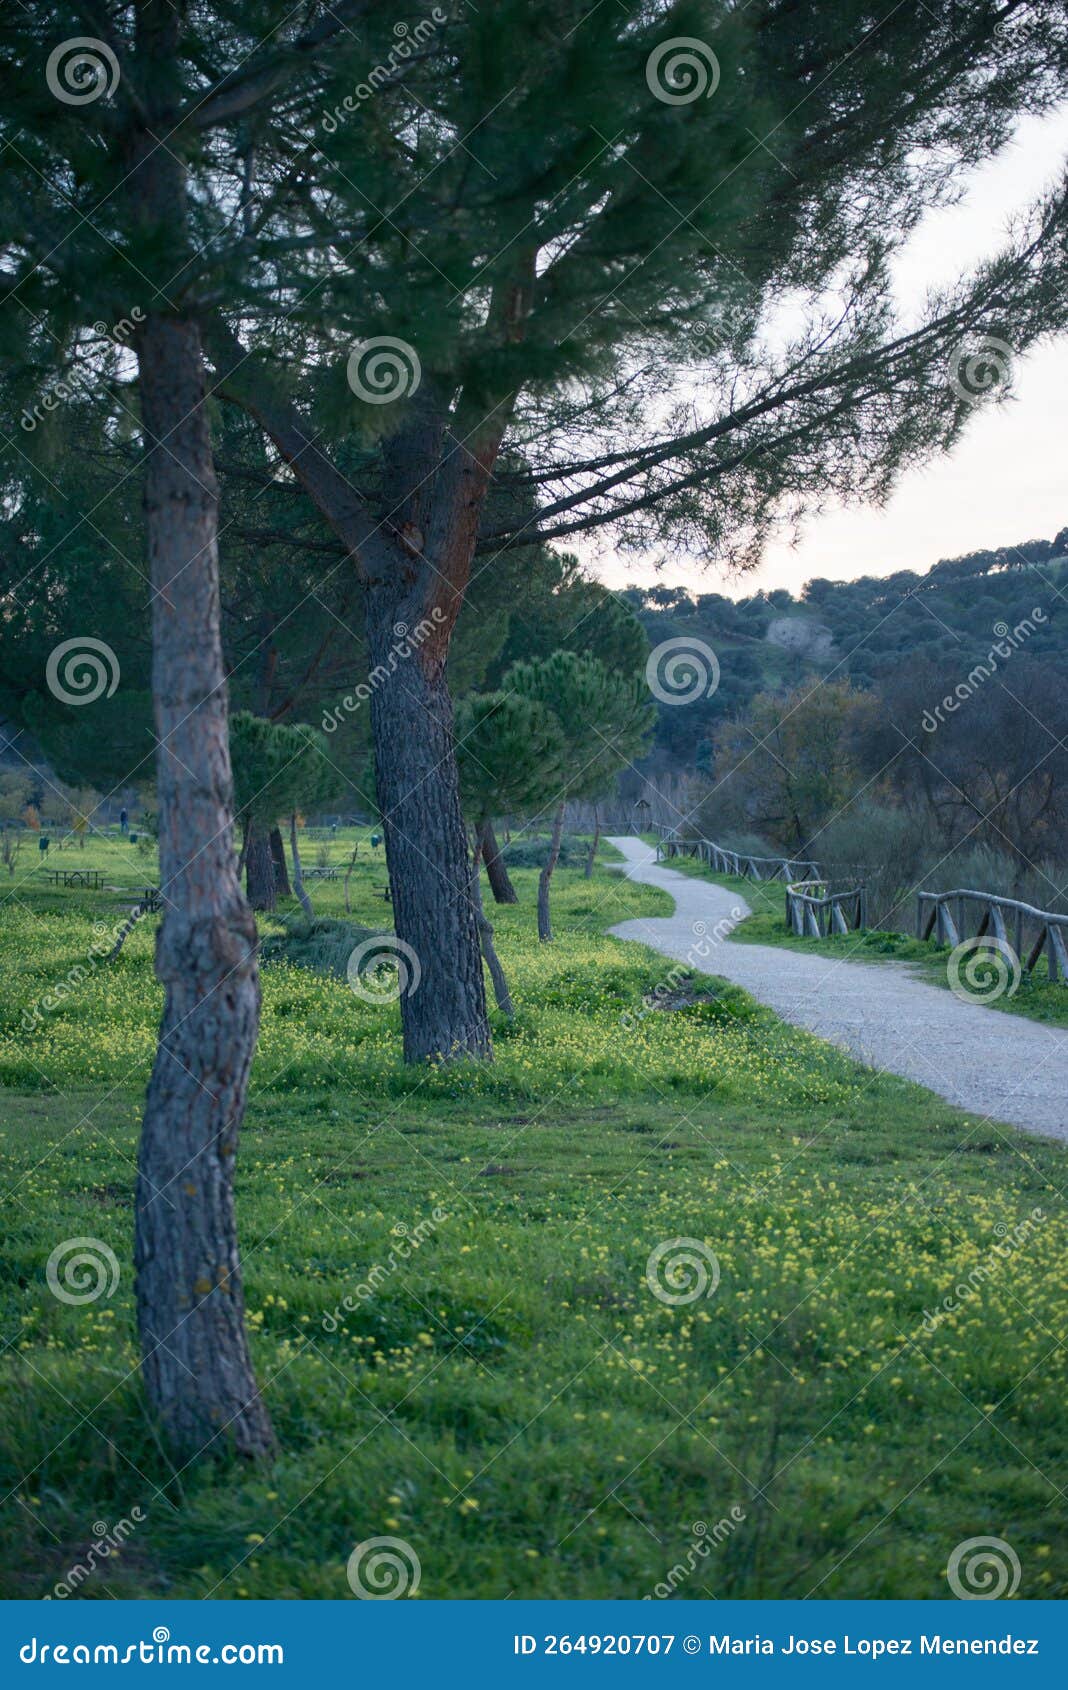 landscape at el pardo, madrid. green meadow and walking path